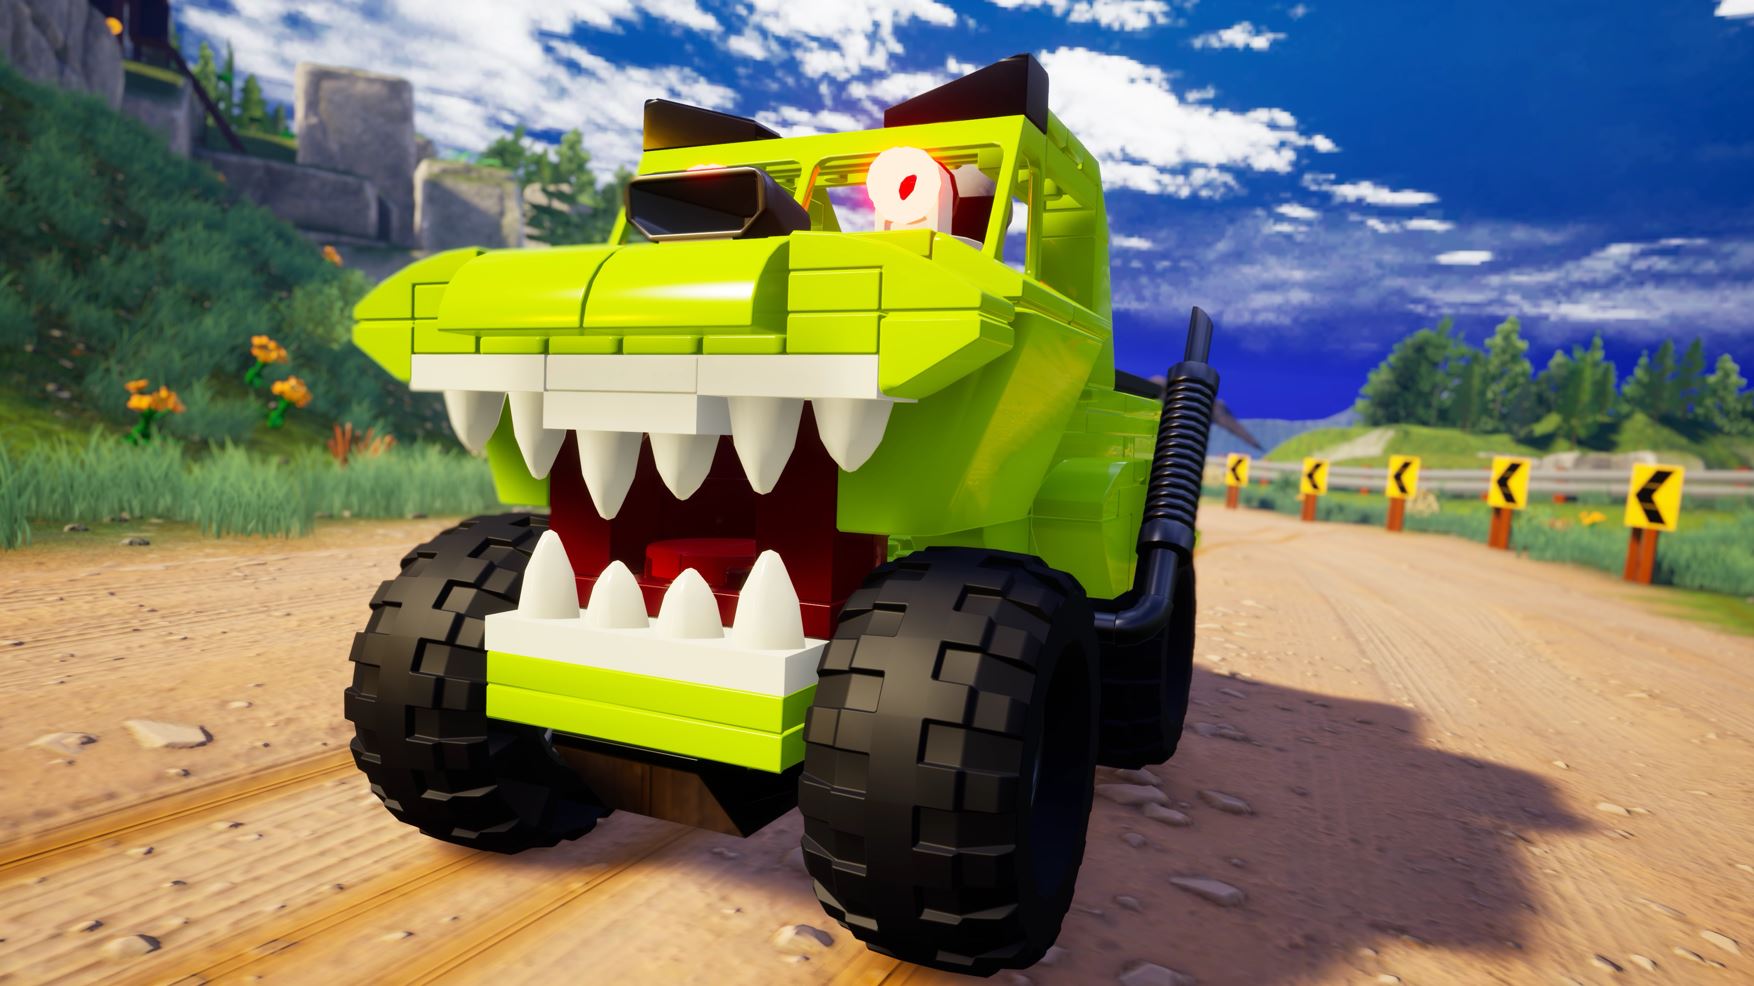 Horizon racer Drive Lego into | Forza Digital kart a turns 2K Trends kid-friendly